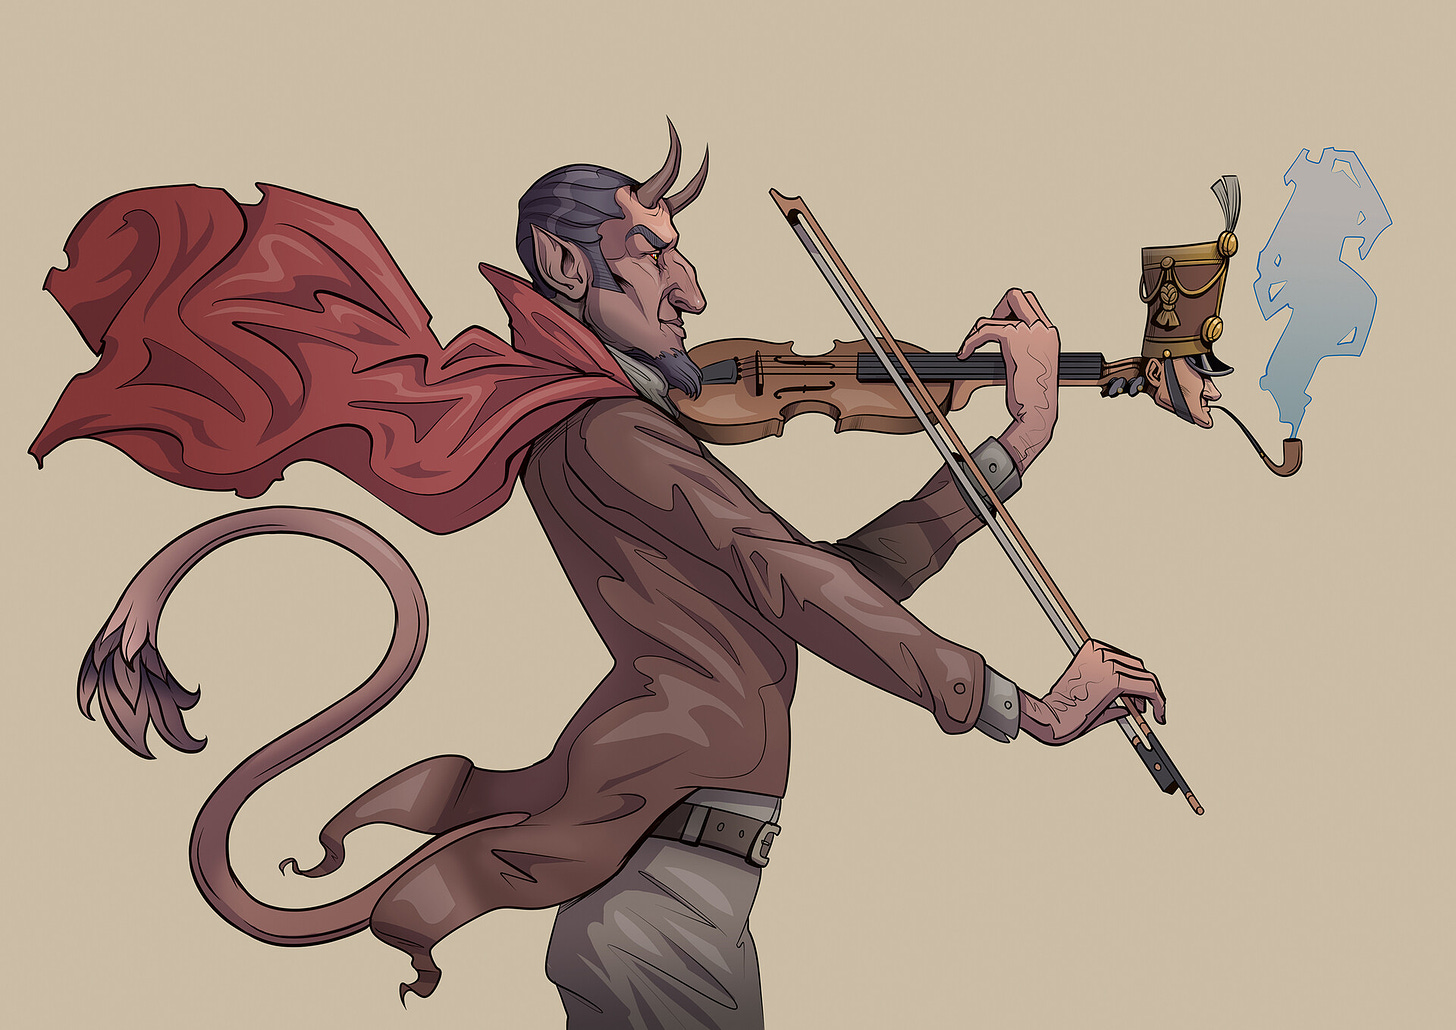 ArtStation - devil playing on violin